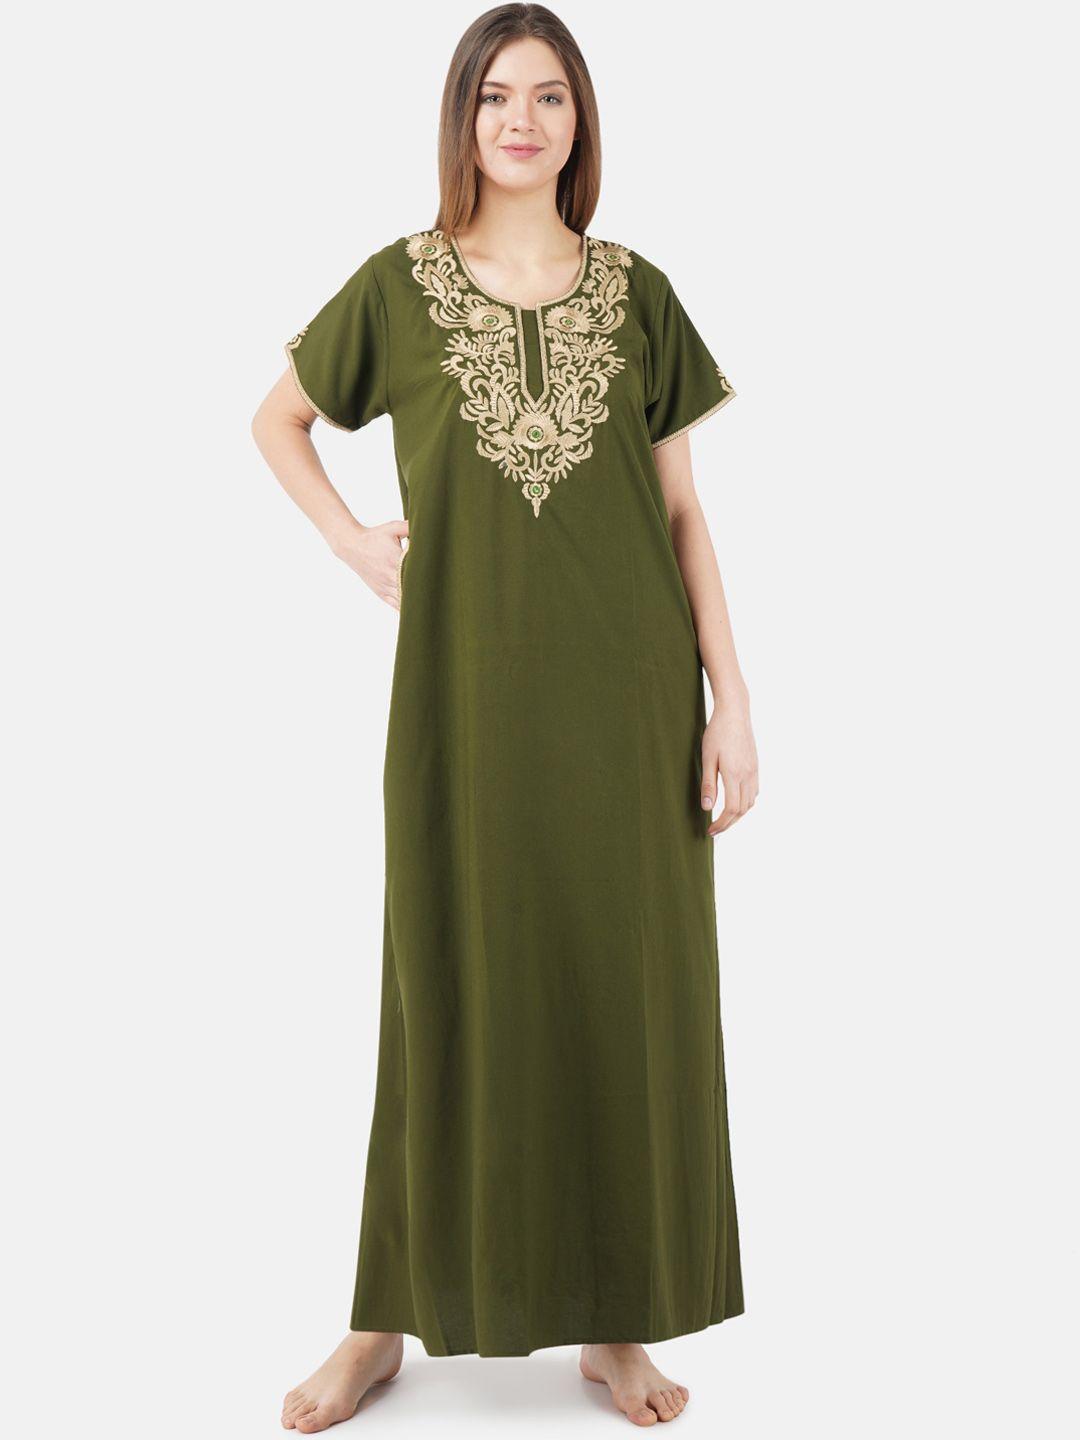 koi sleepwear olive green embroidered nightdress